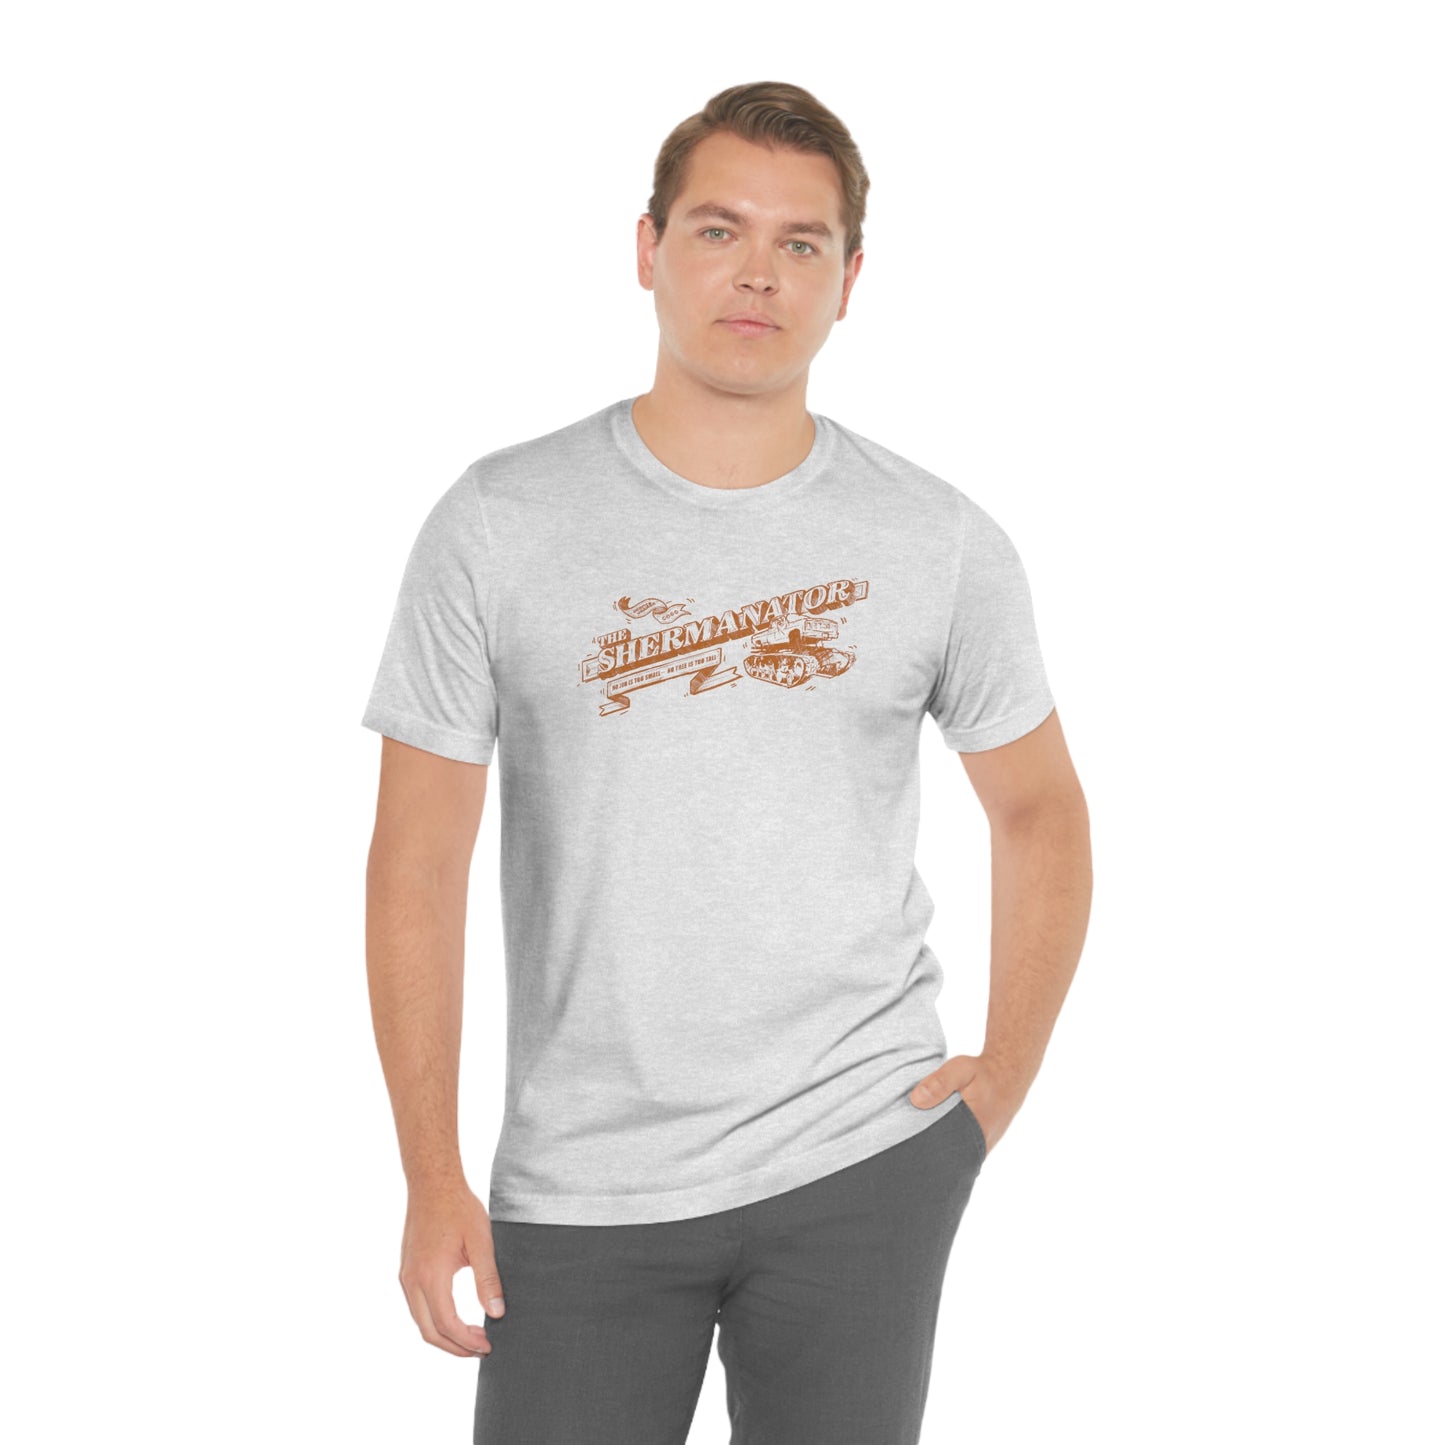 Shermanator T-Shirt